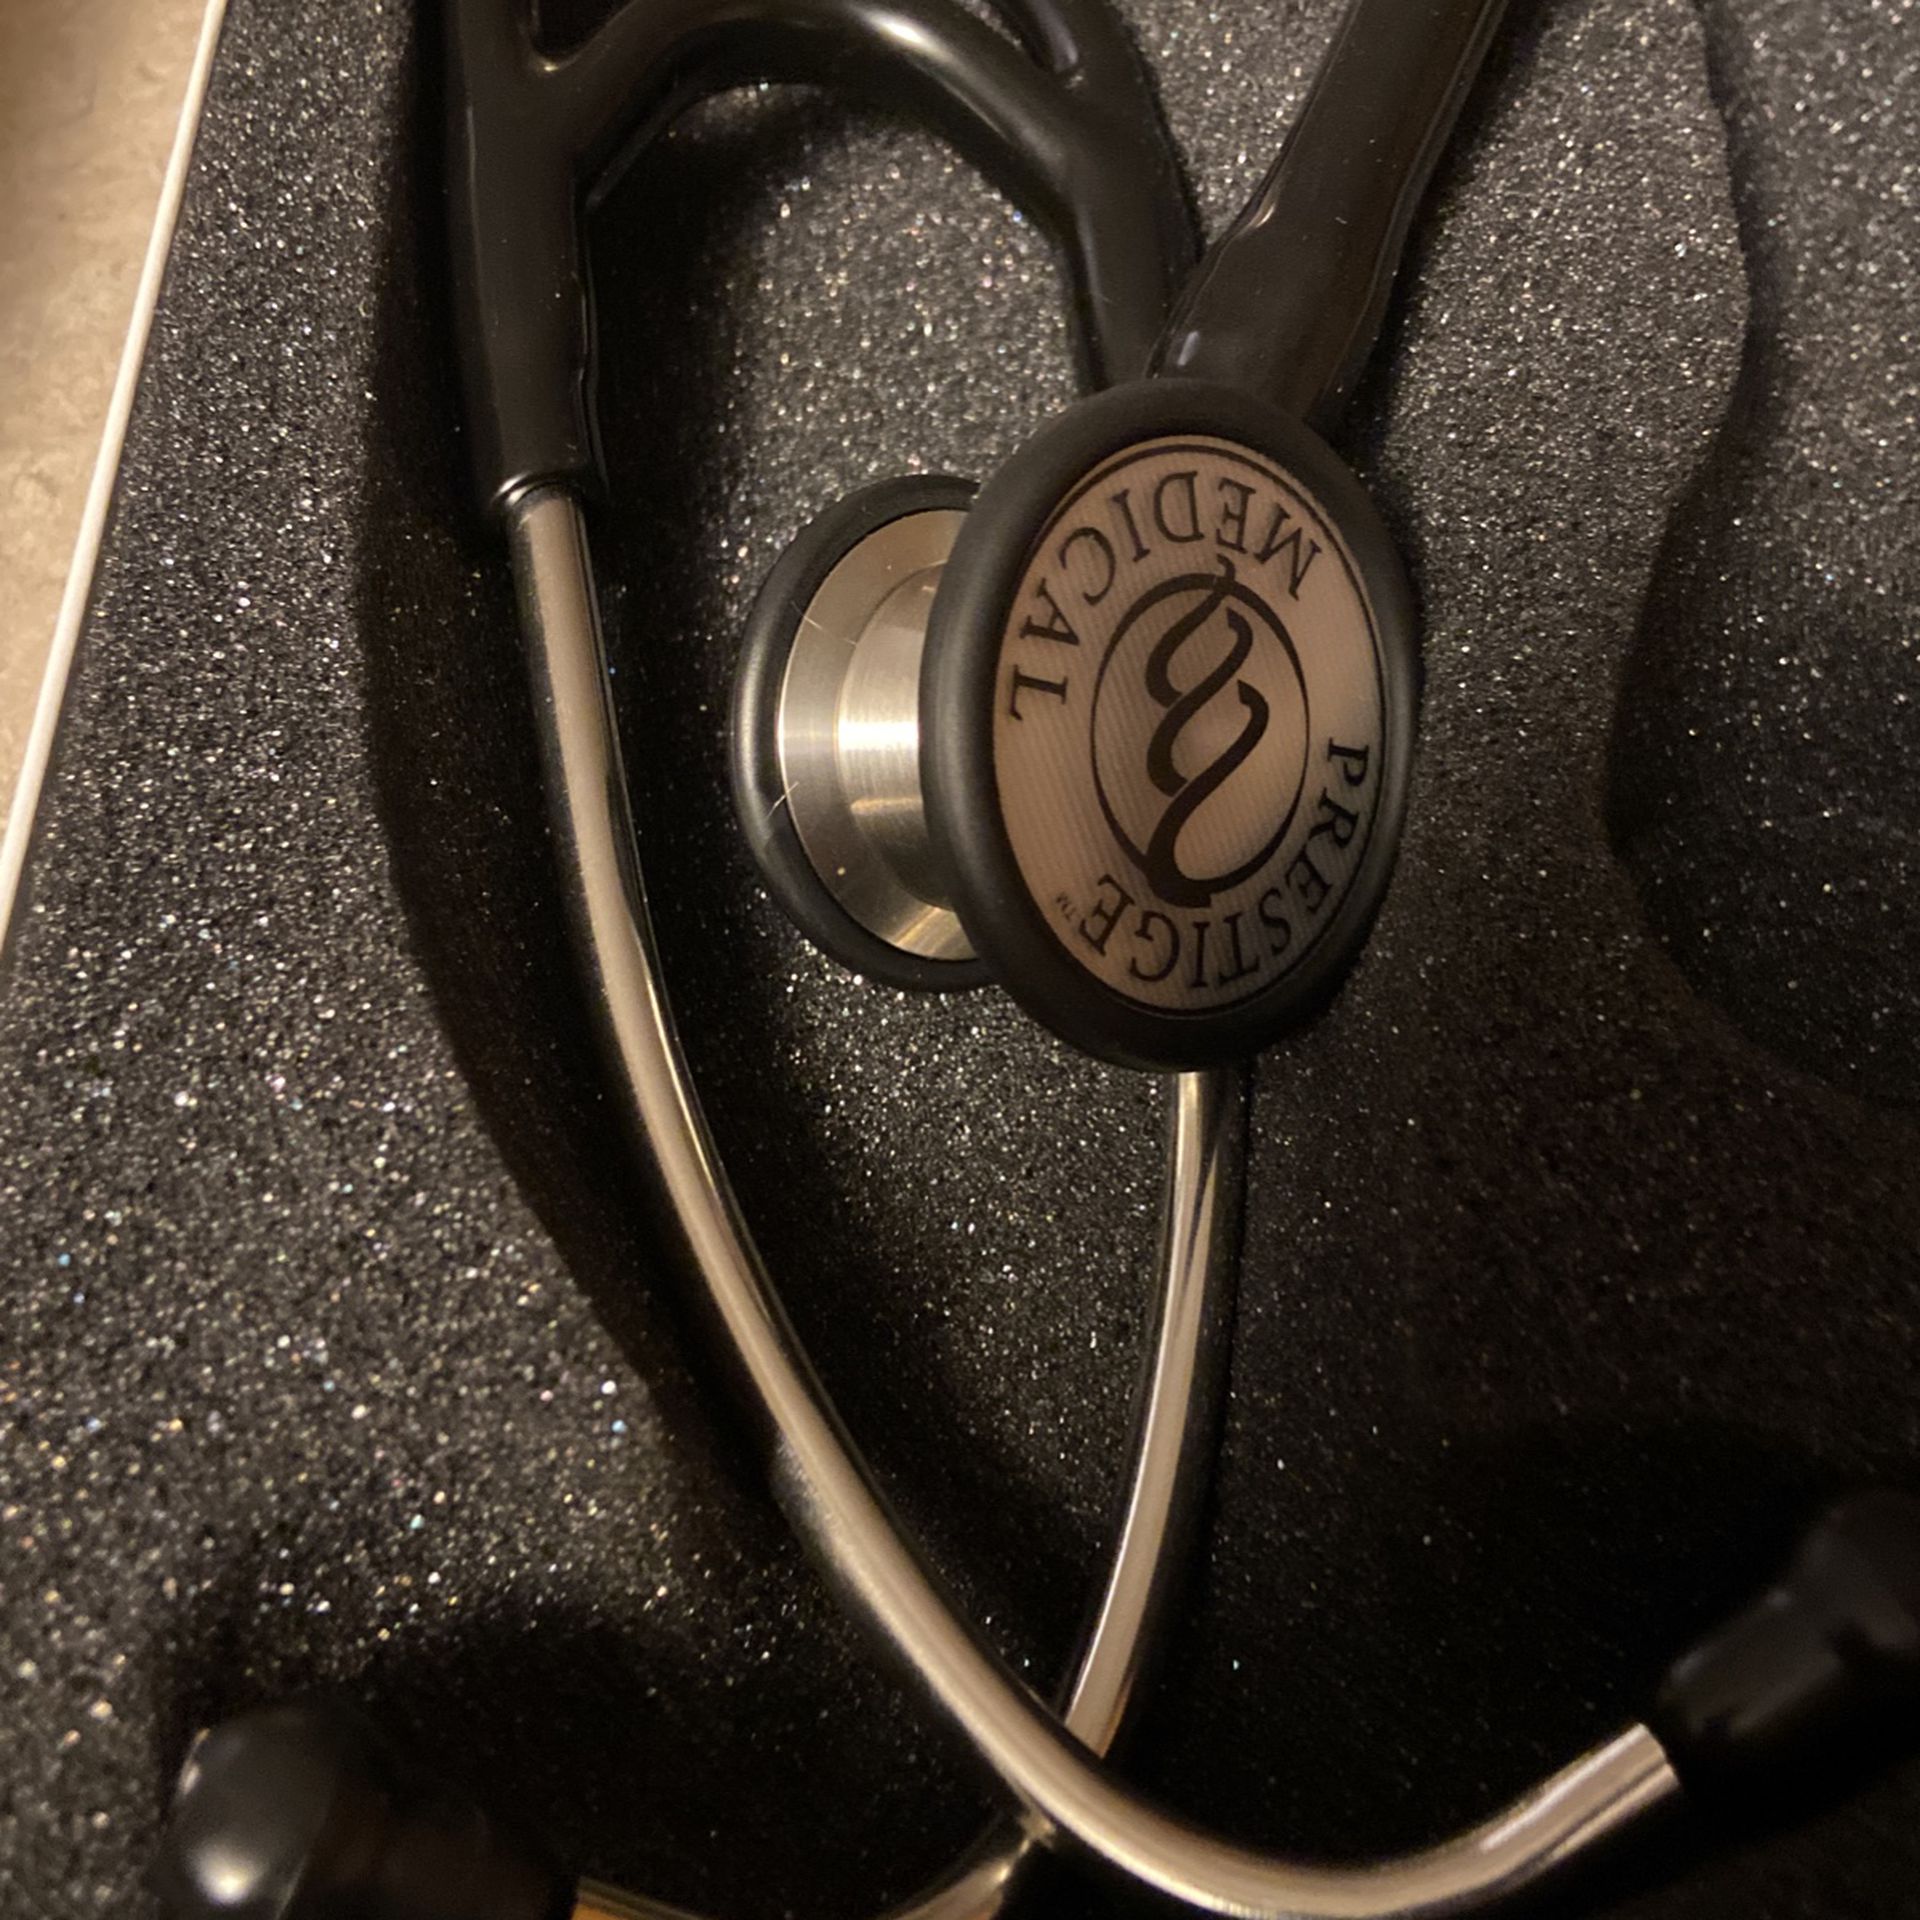 Stethoscope new In box